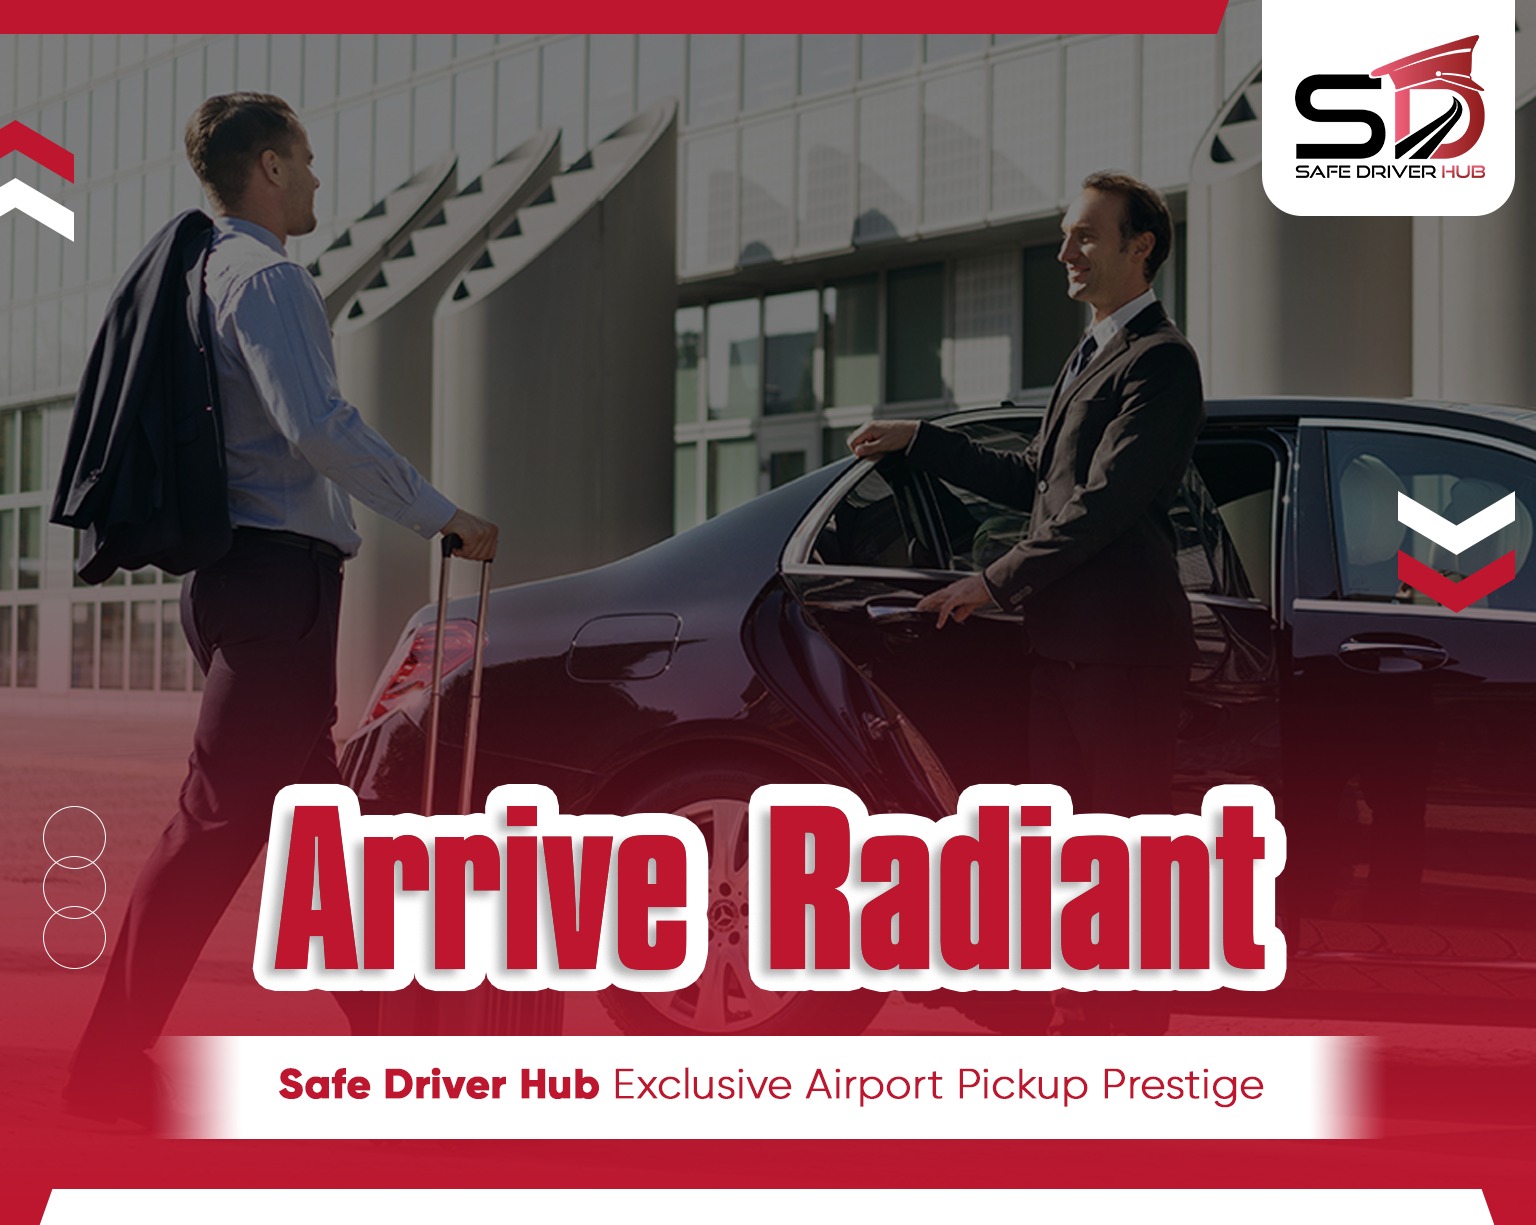 Arrive-Radiant-SafeDriver-Hub-Exclusive-Airport-Pickup-Prestige